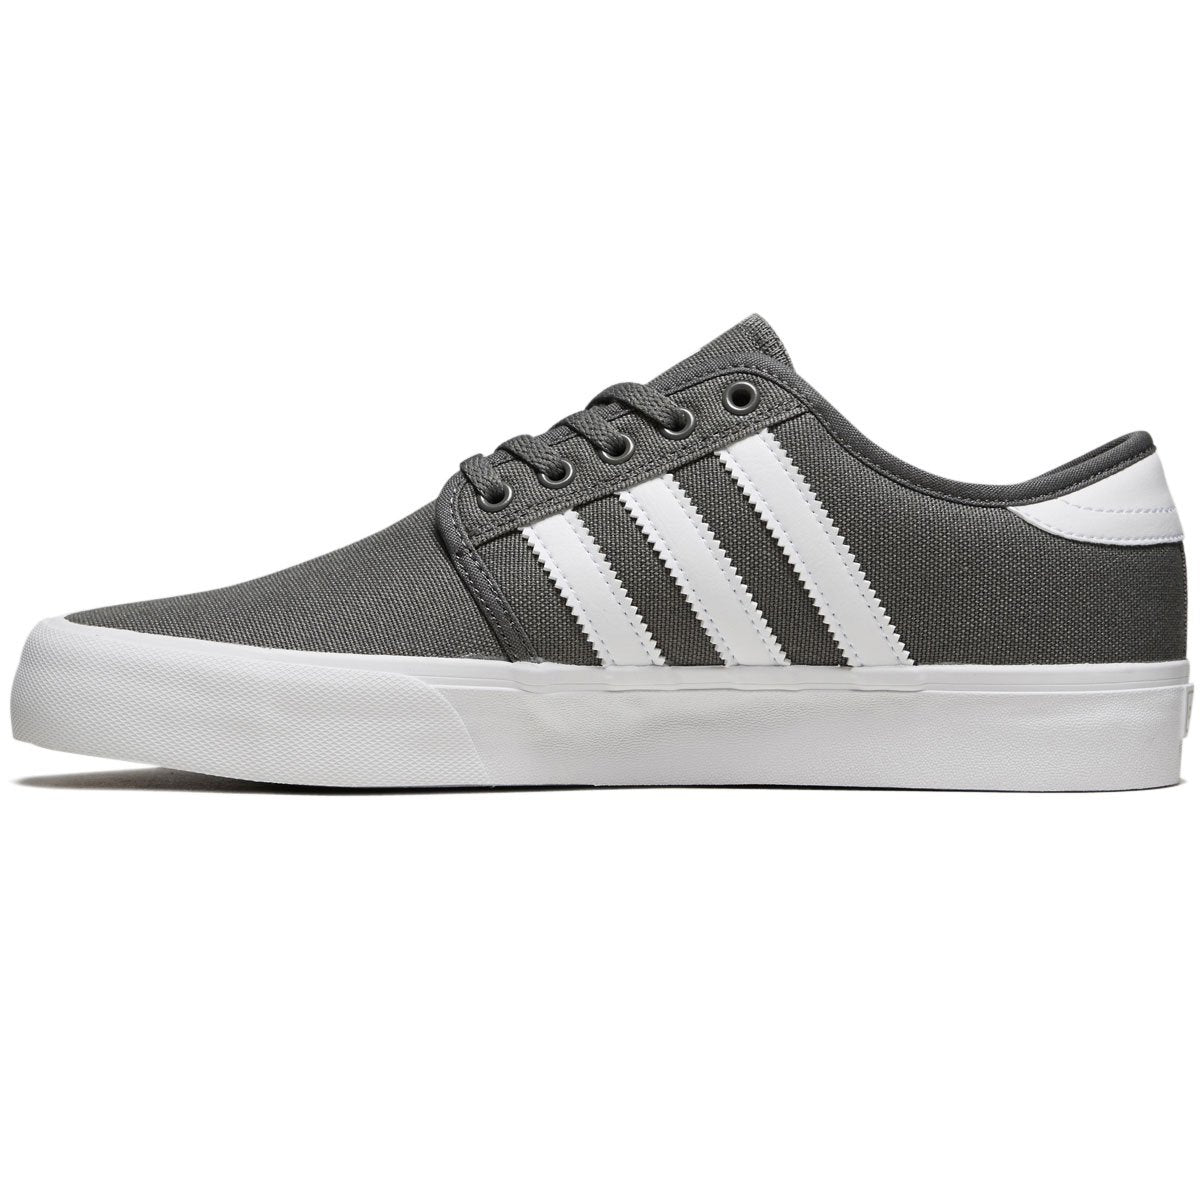 Adidas Seeley Xt Shoes - Grey/White/White image 2